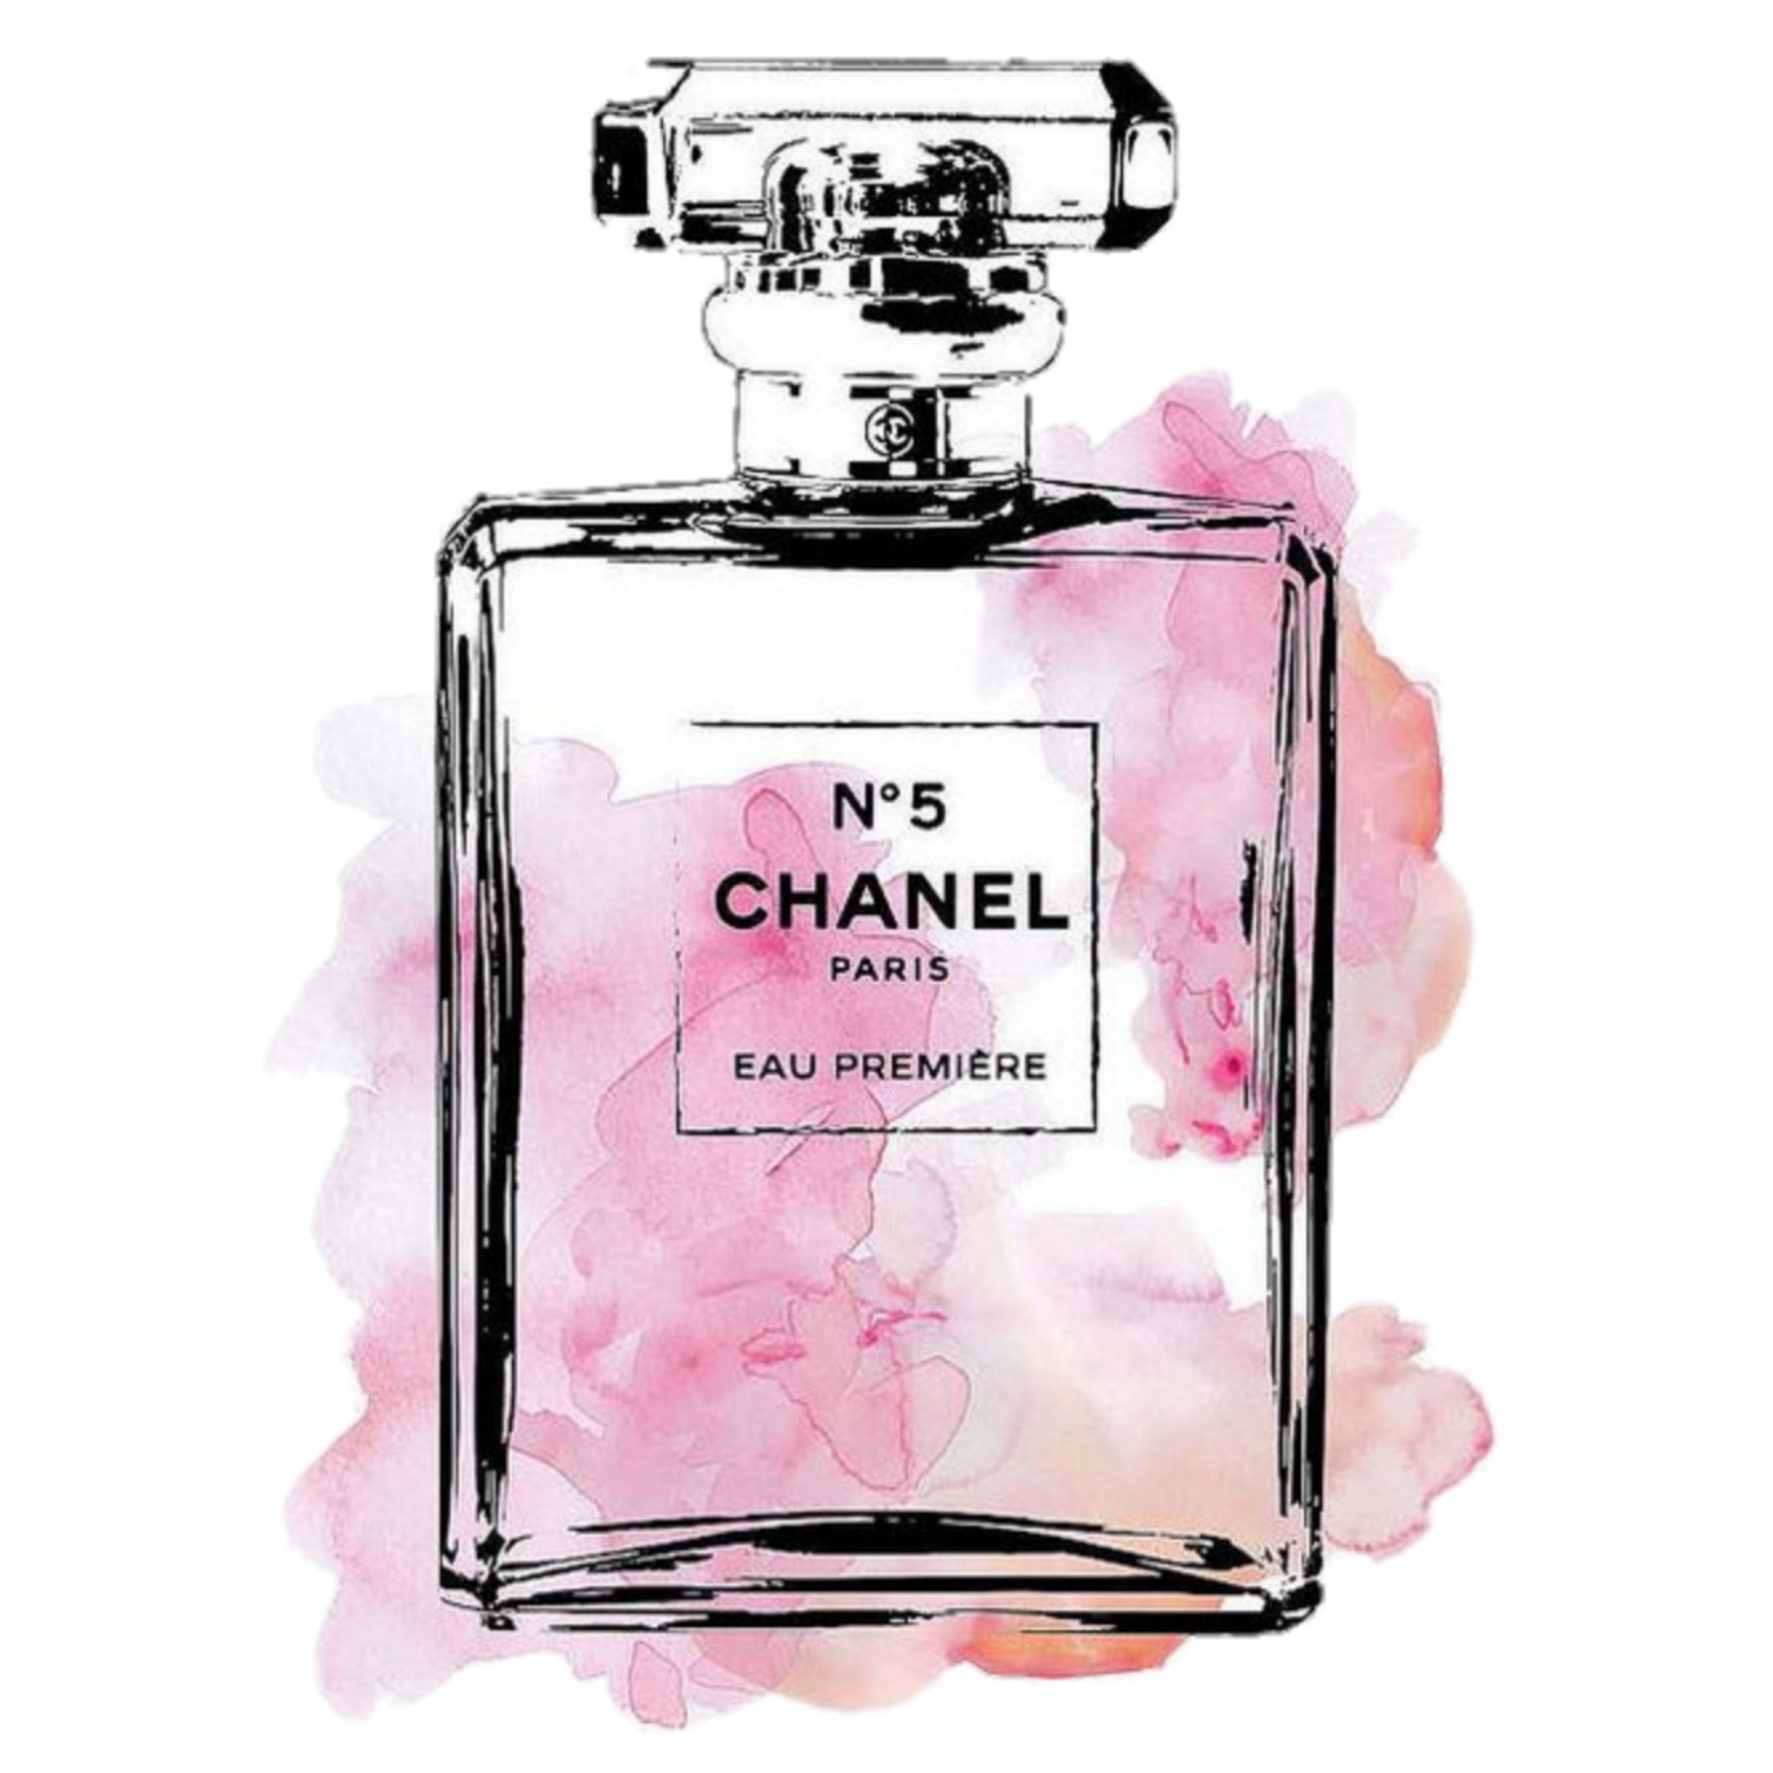 chanel freetoedit #Chanel sticker by @tns84.